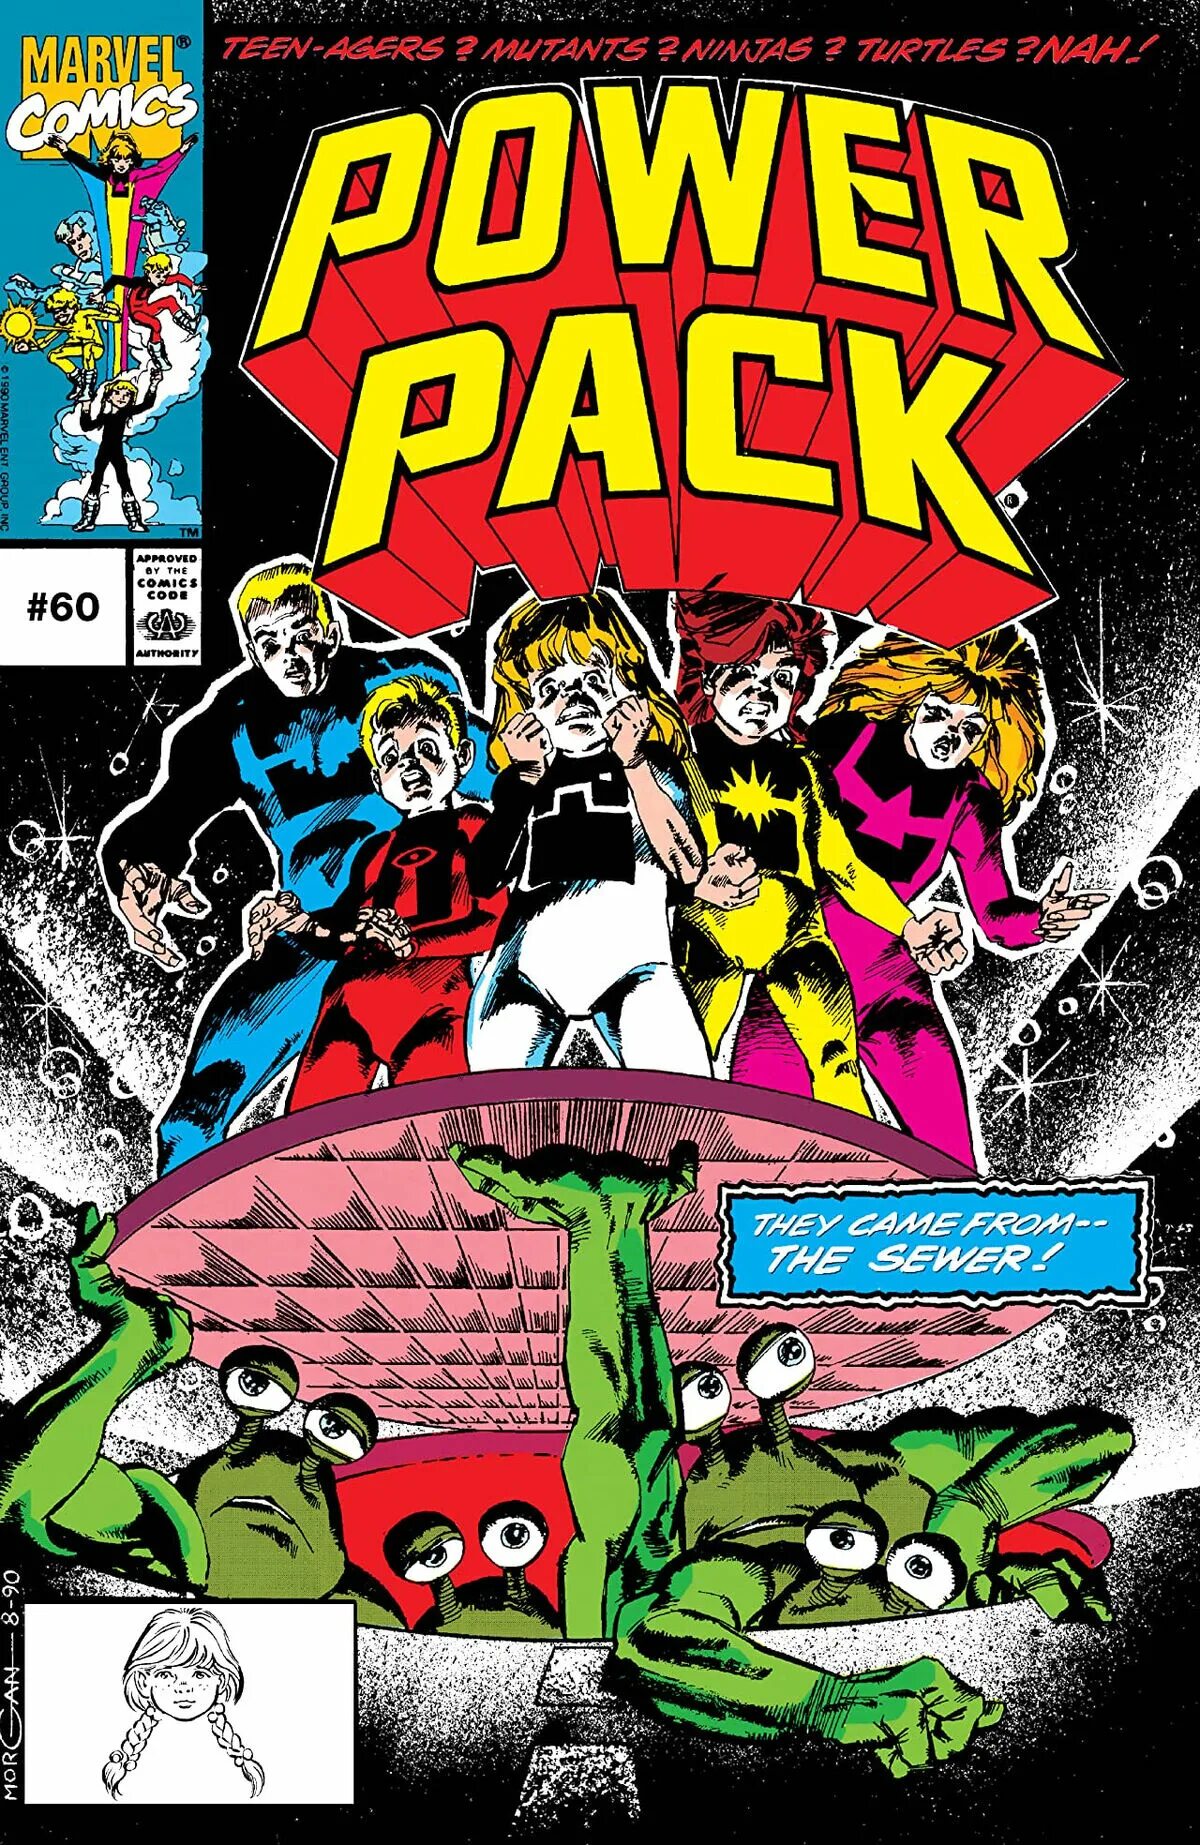 Power Pack Marvel. POWERPACK комиксы. Power Pack Marvel Comics. Паки марвел